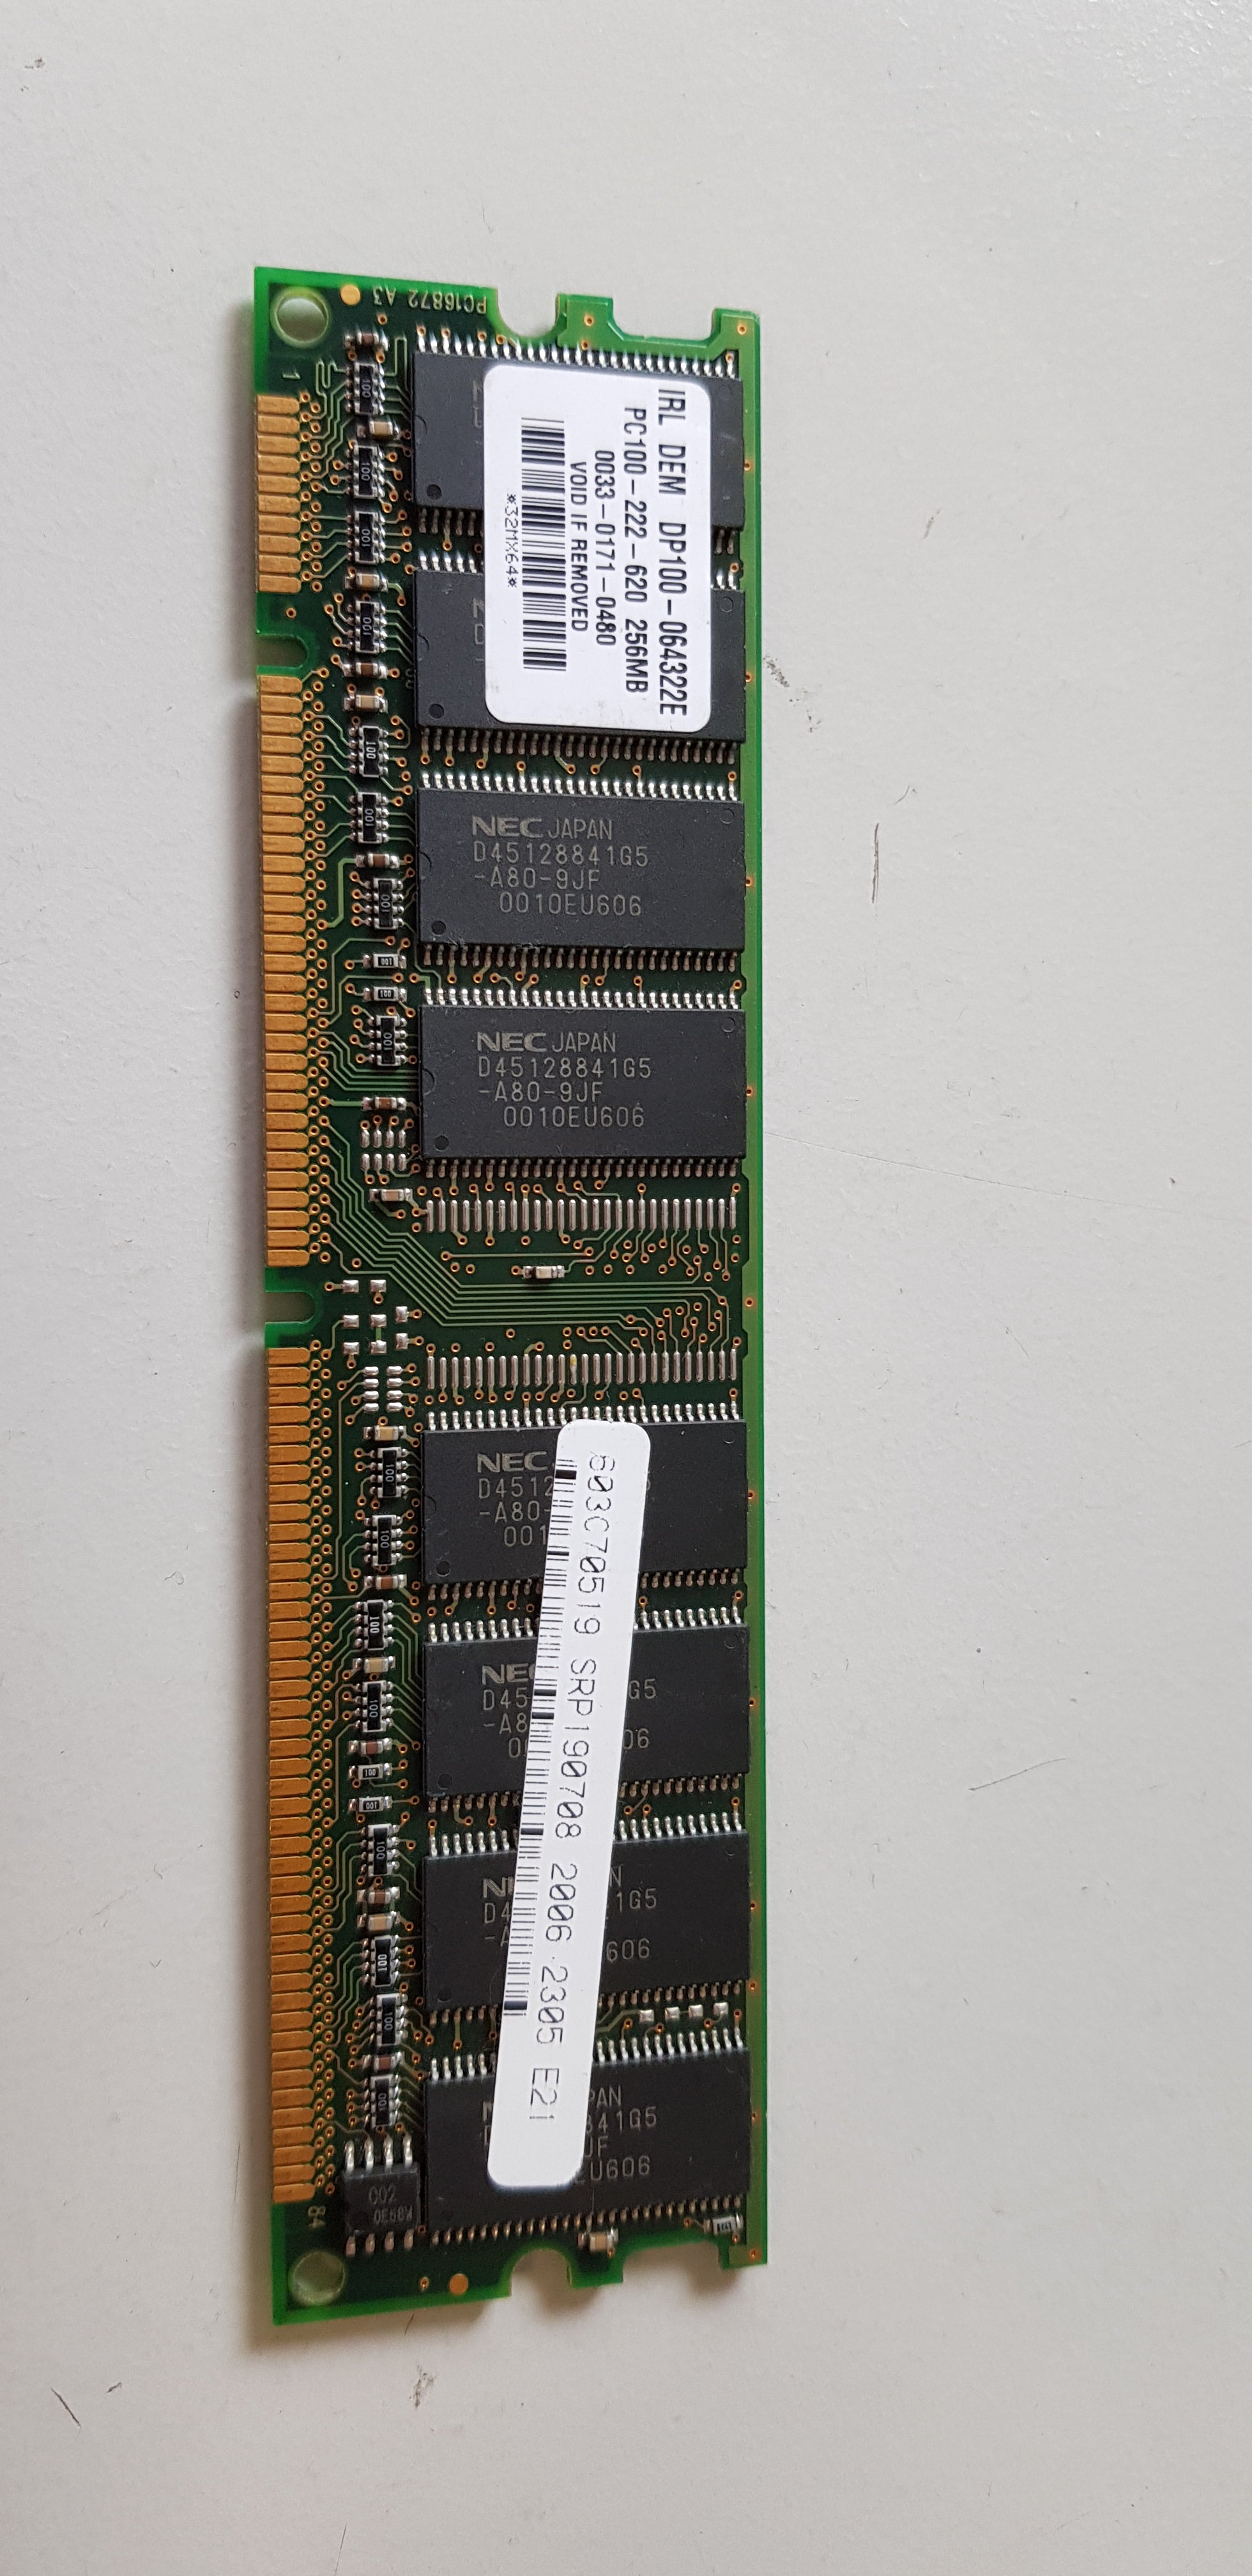 IRL DEM 256MB PC100-222-620 256MB CL2 SDRAM PC100 Memory Module(DP100-064322E)